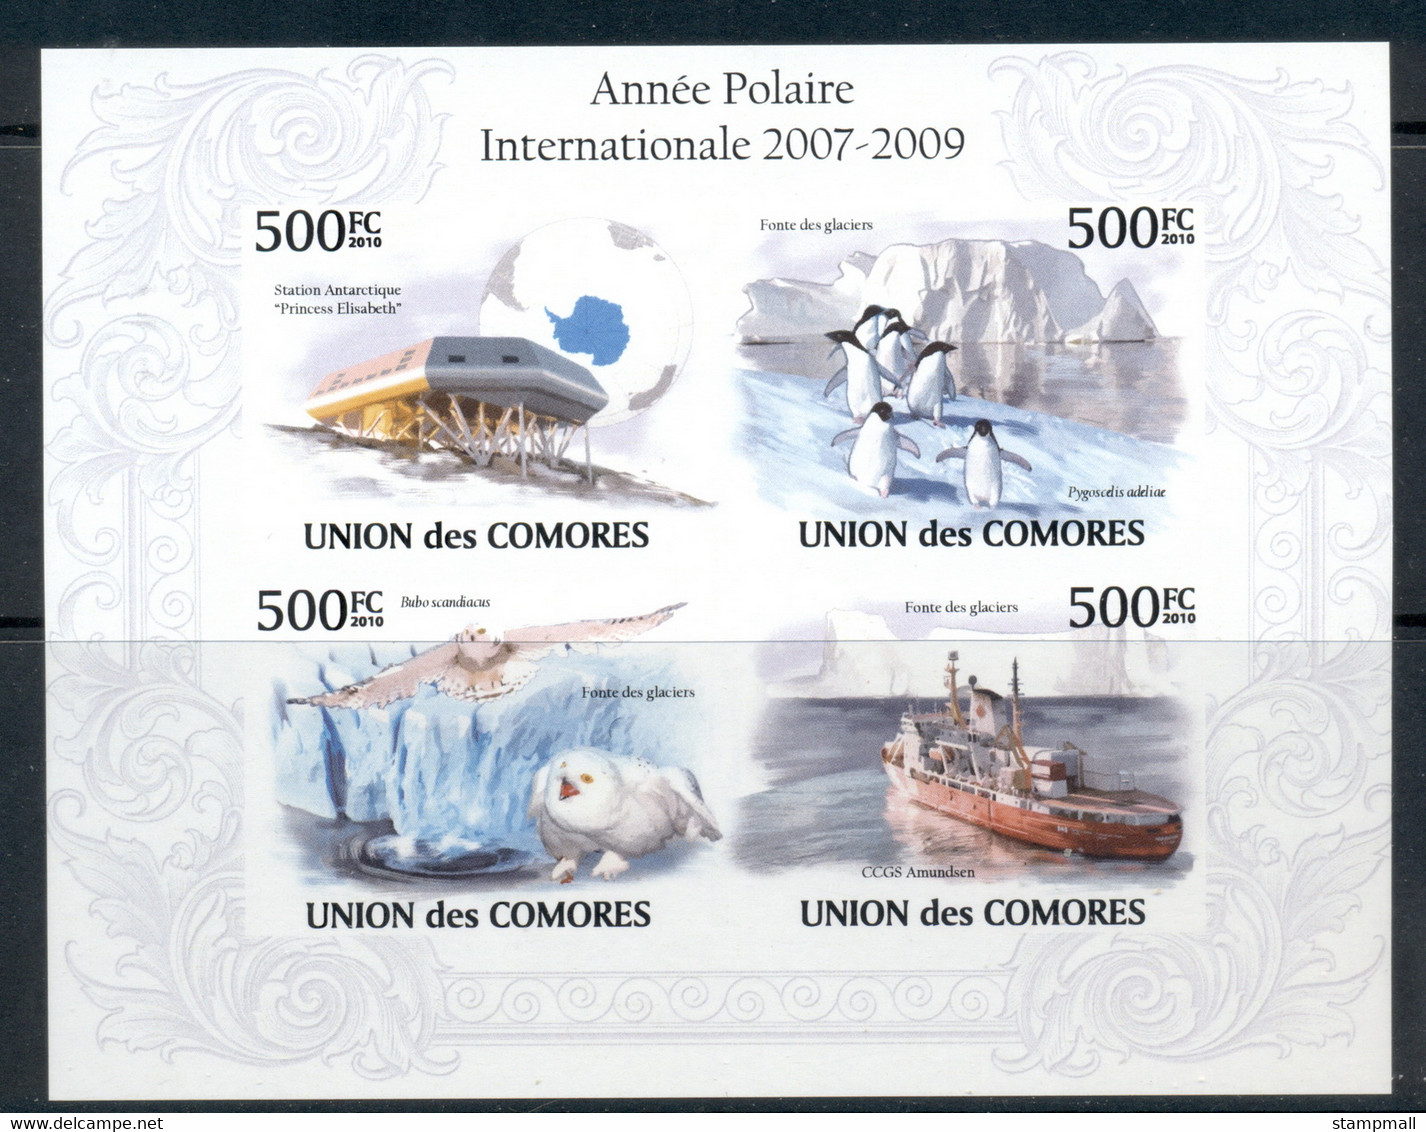 Comoro Is 2010 International Polar Year, Bird, Ship MS IMPERF MUH - Comores (1975-...)